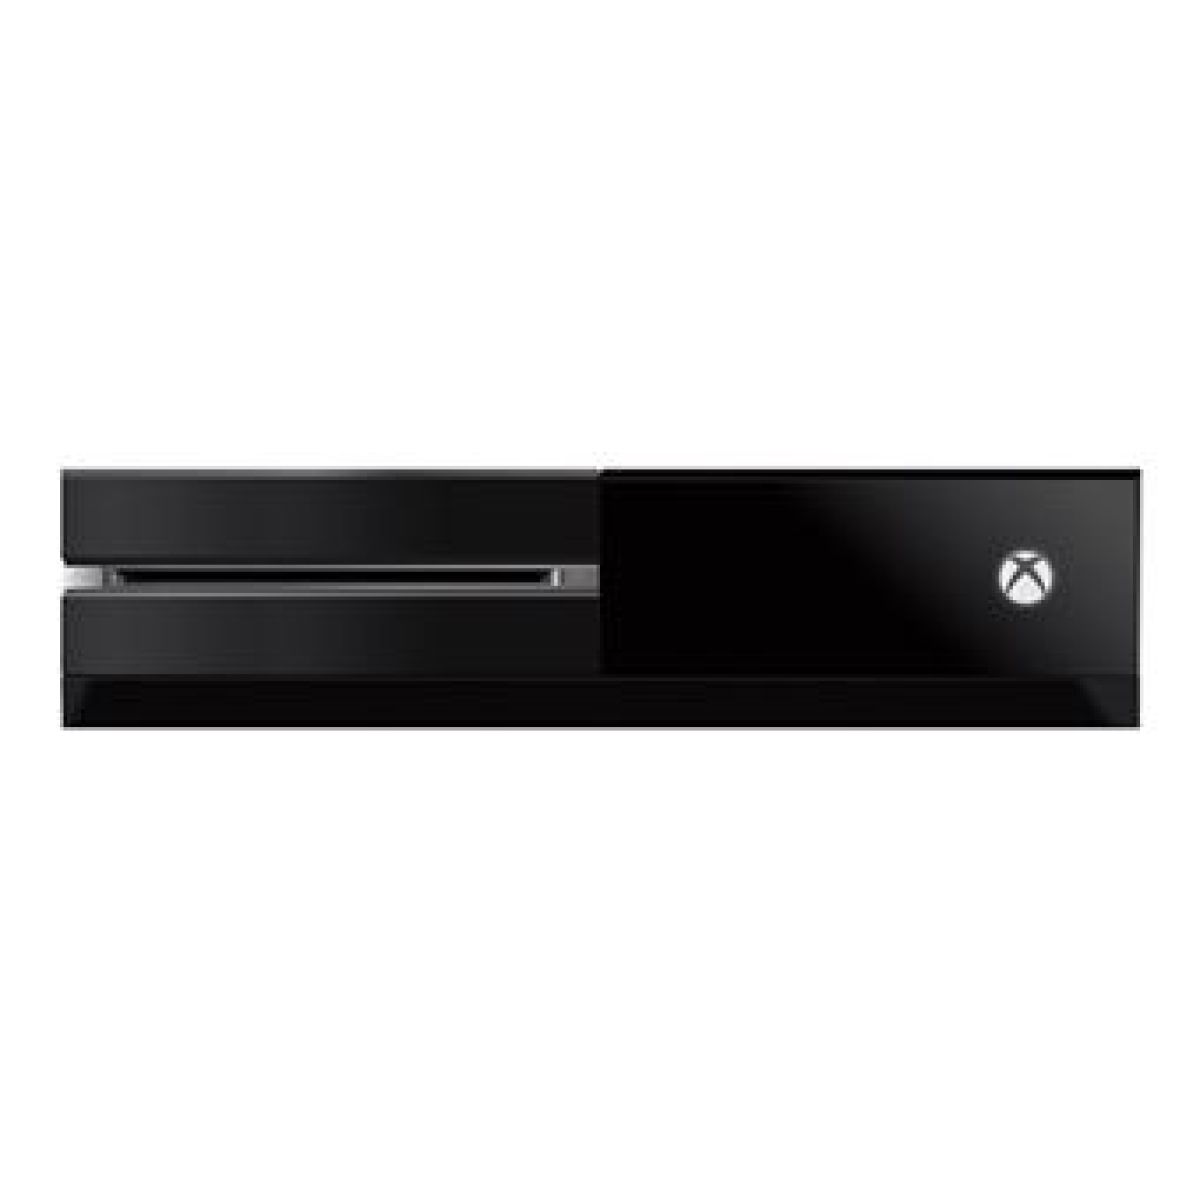 Microsoft Xbox One 1 To Noire sans manette Console